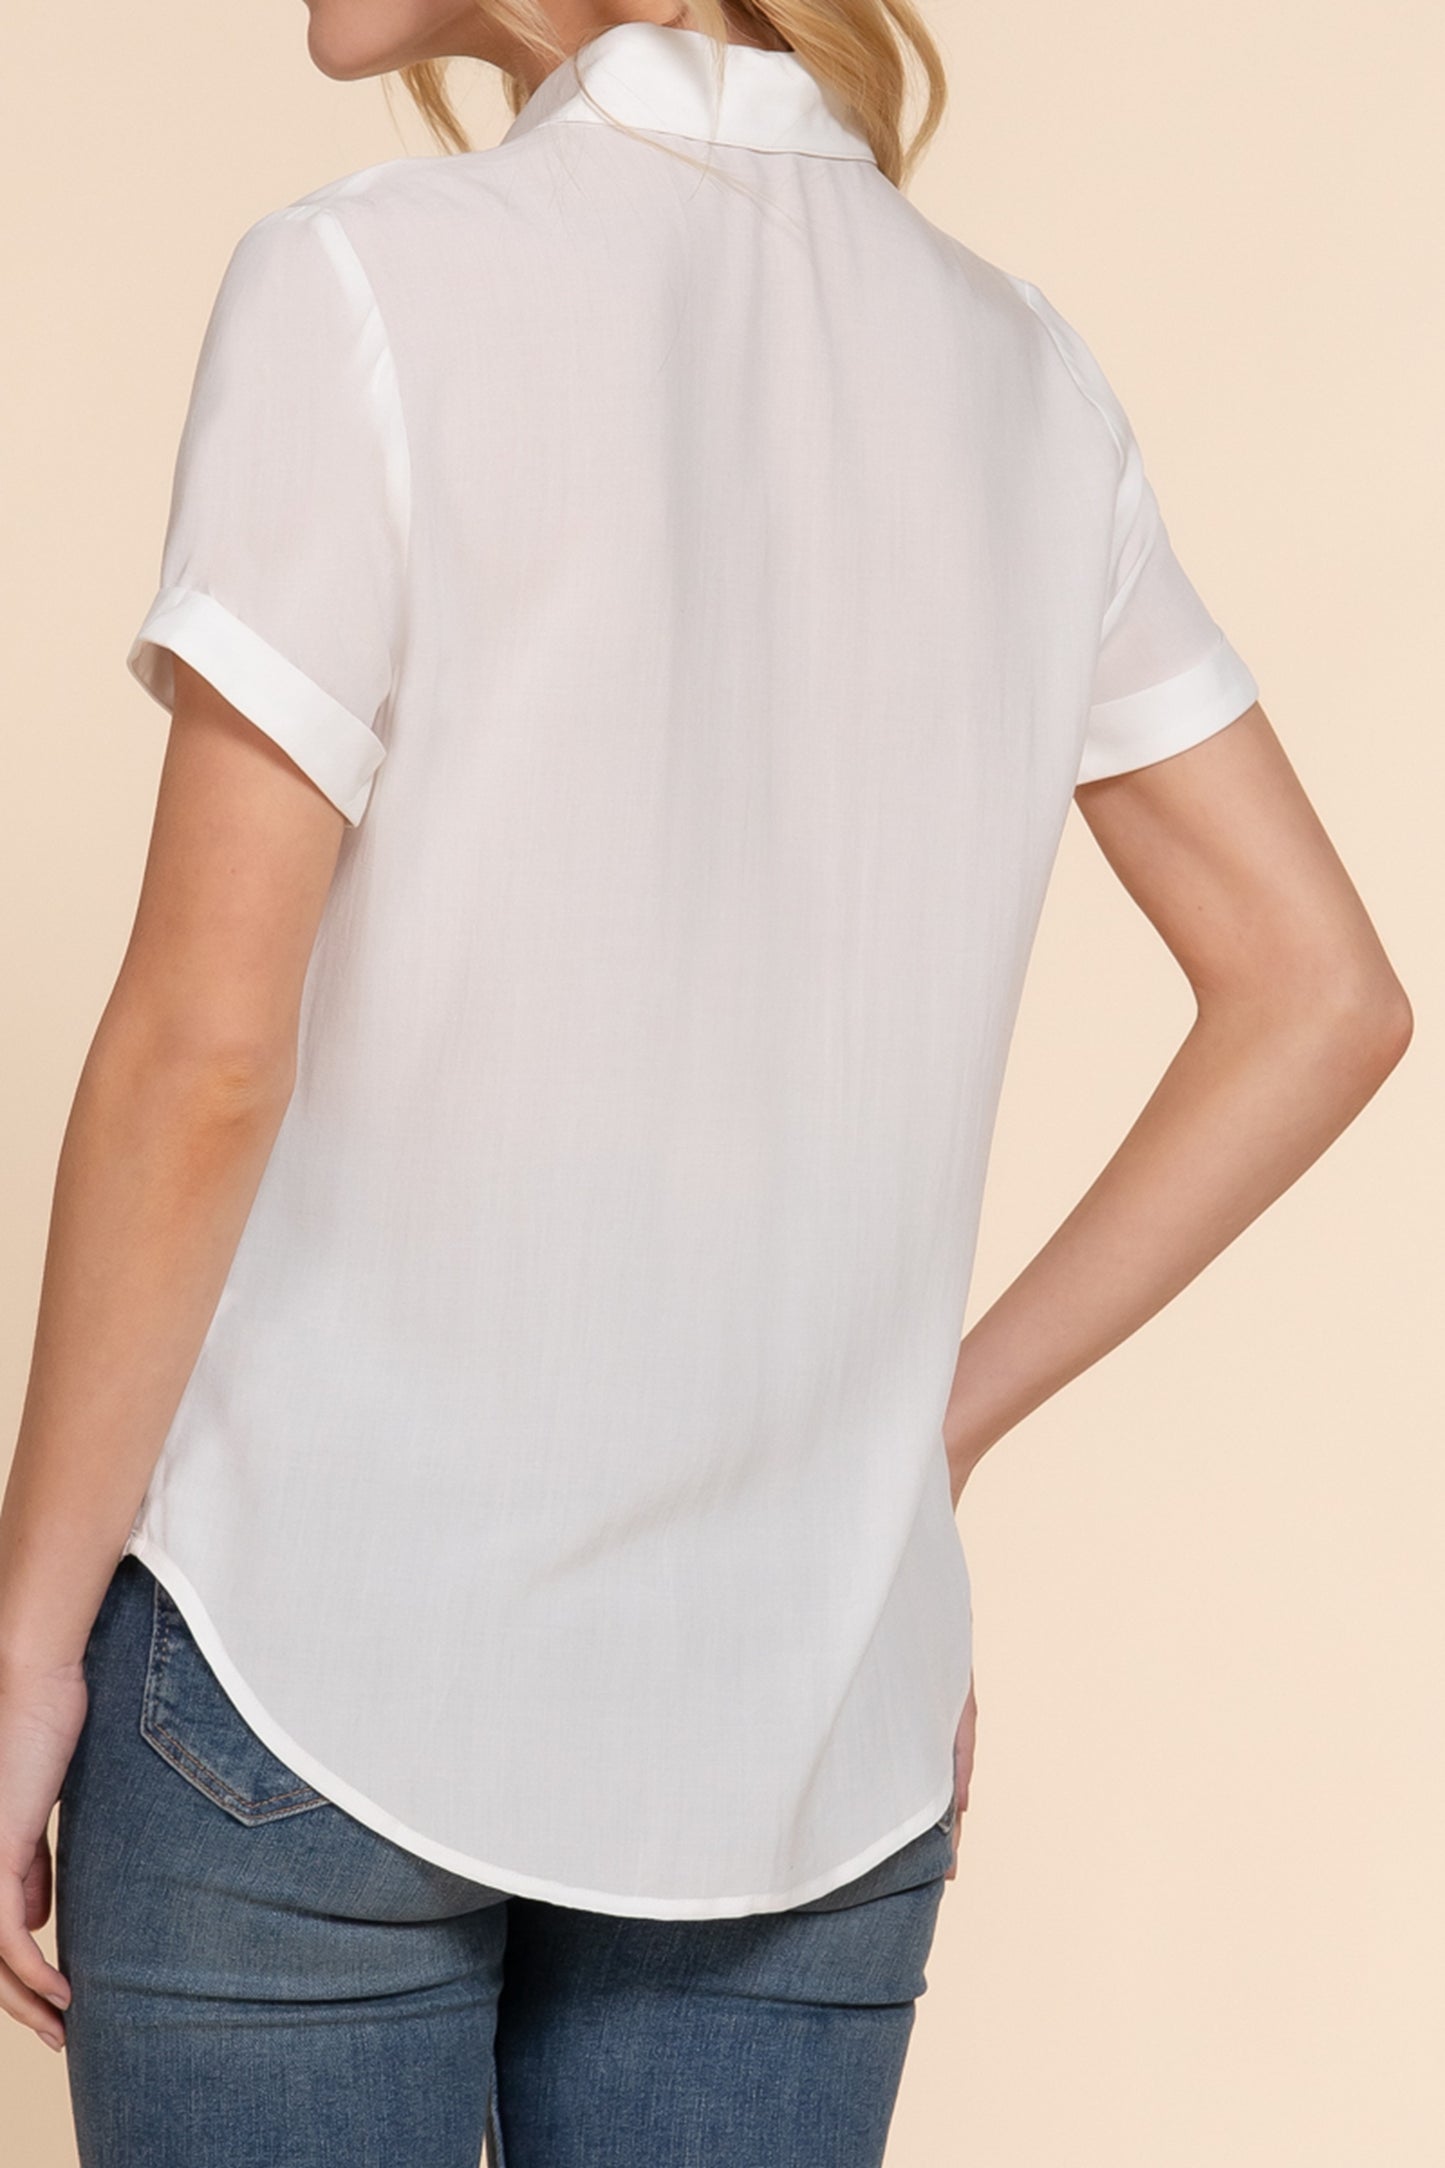 Women's Casual Short Sleeve Button-Down Blouse Shirt